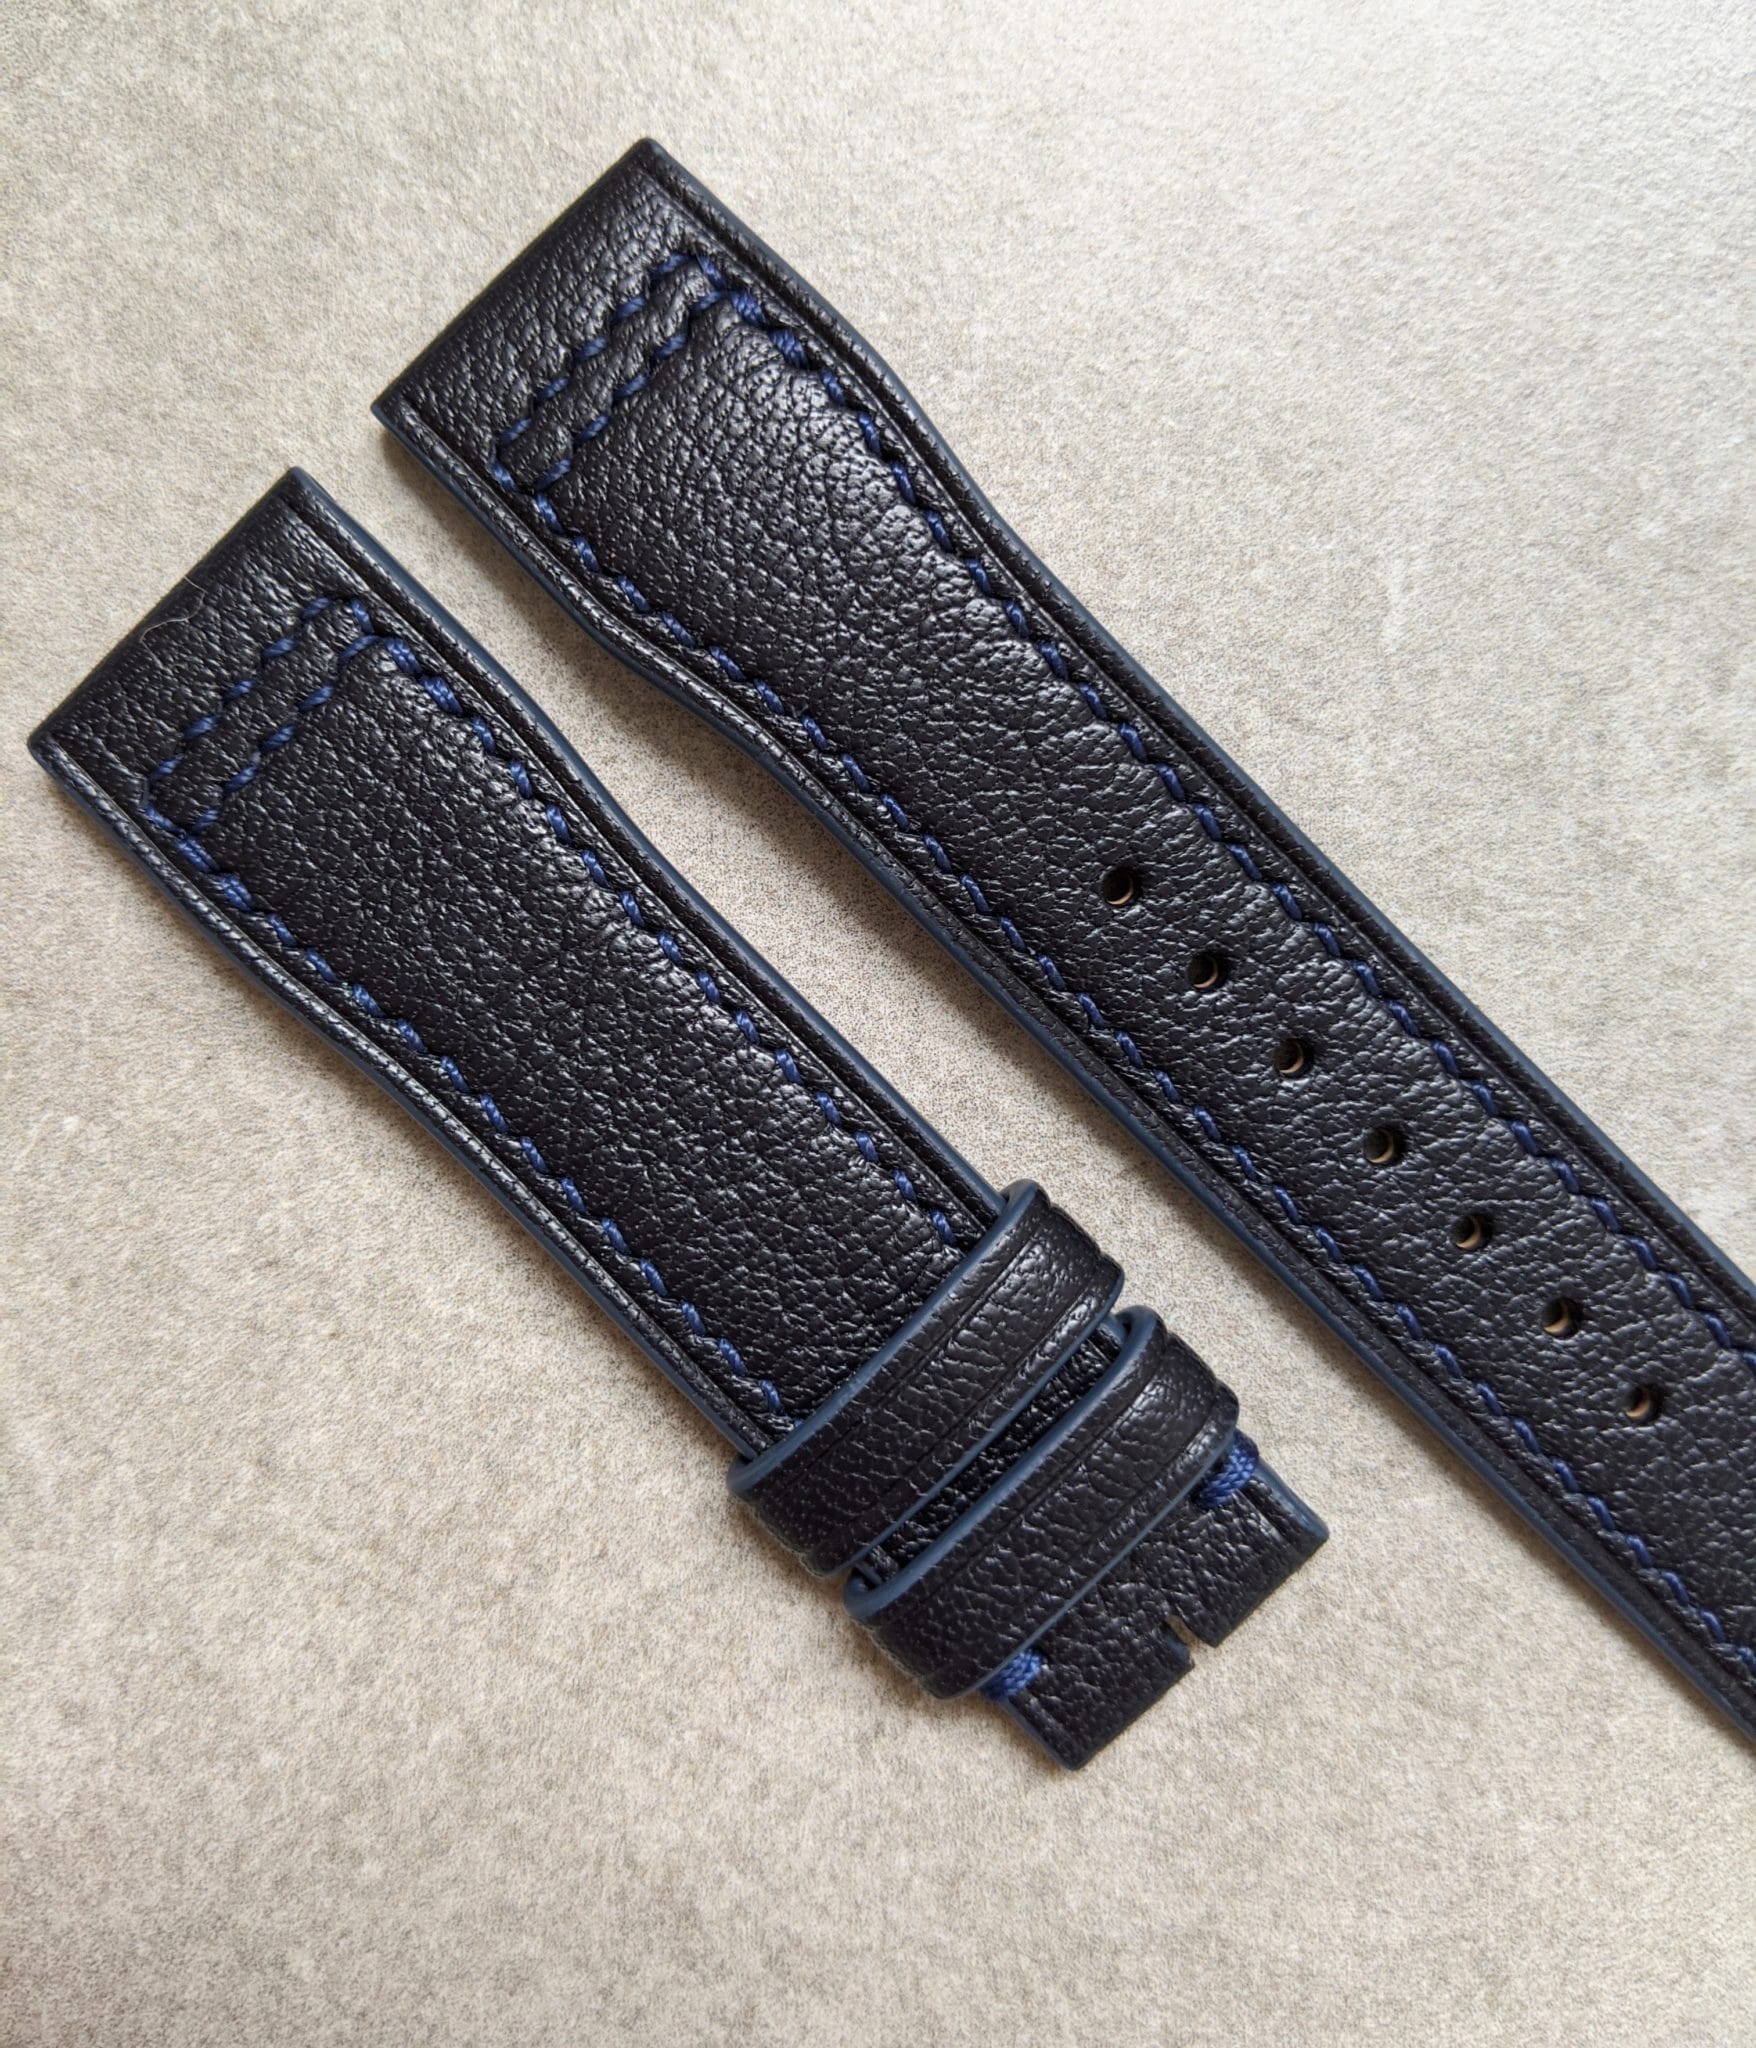 Goatskin IWC Style Strap - Navy Blue - The Strap Tailor